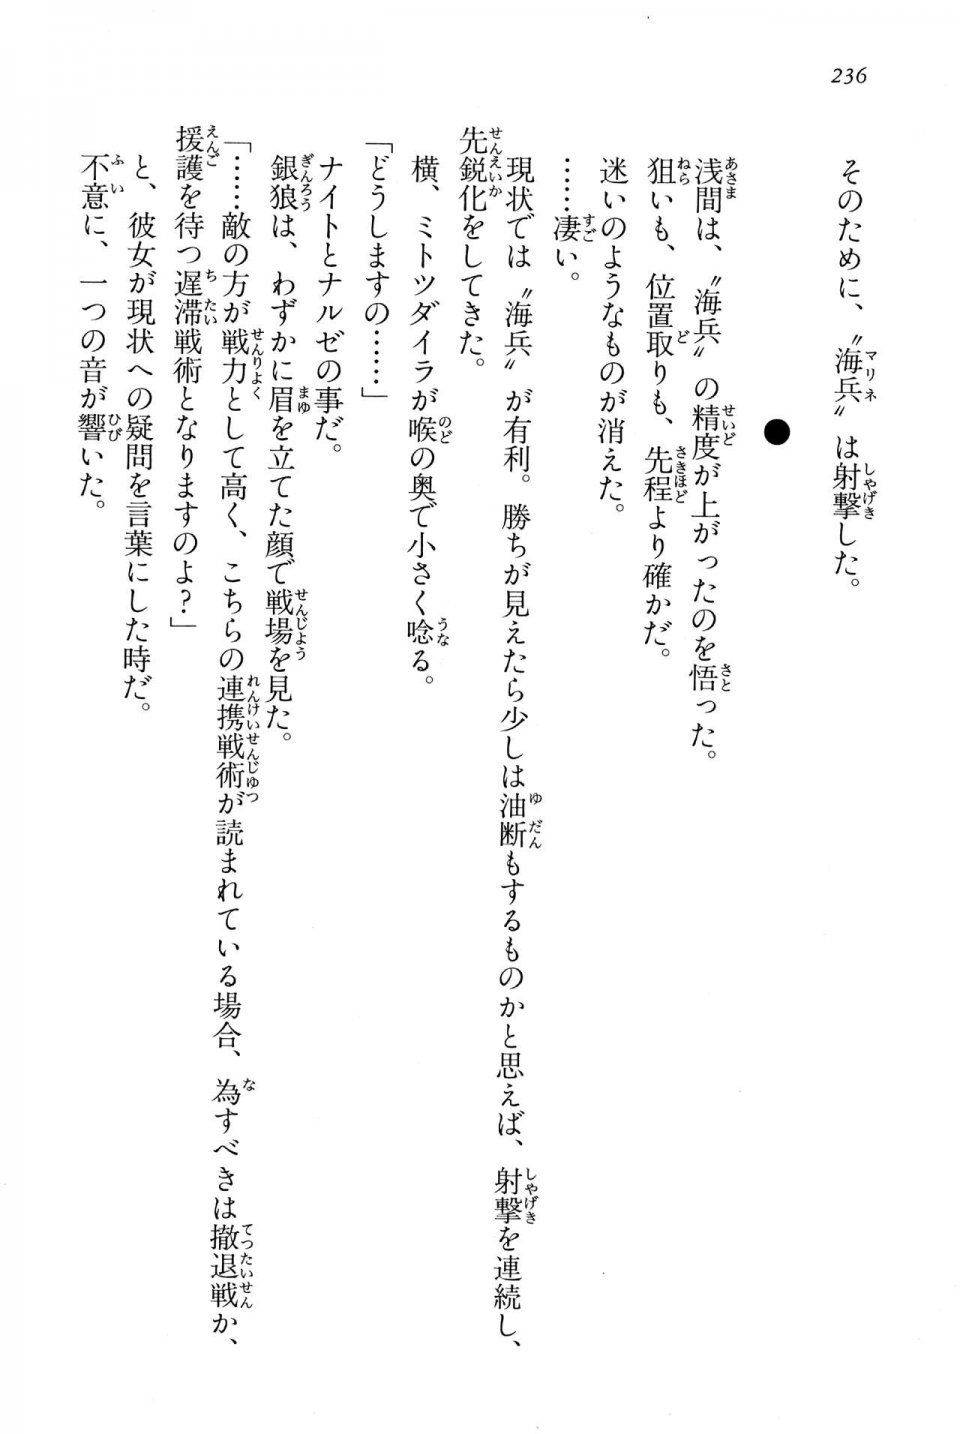 Kyoukai Senjou no Horizon BD Special Mininovel Vol 6(3B) - Photo #240